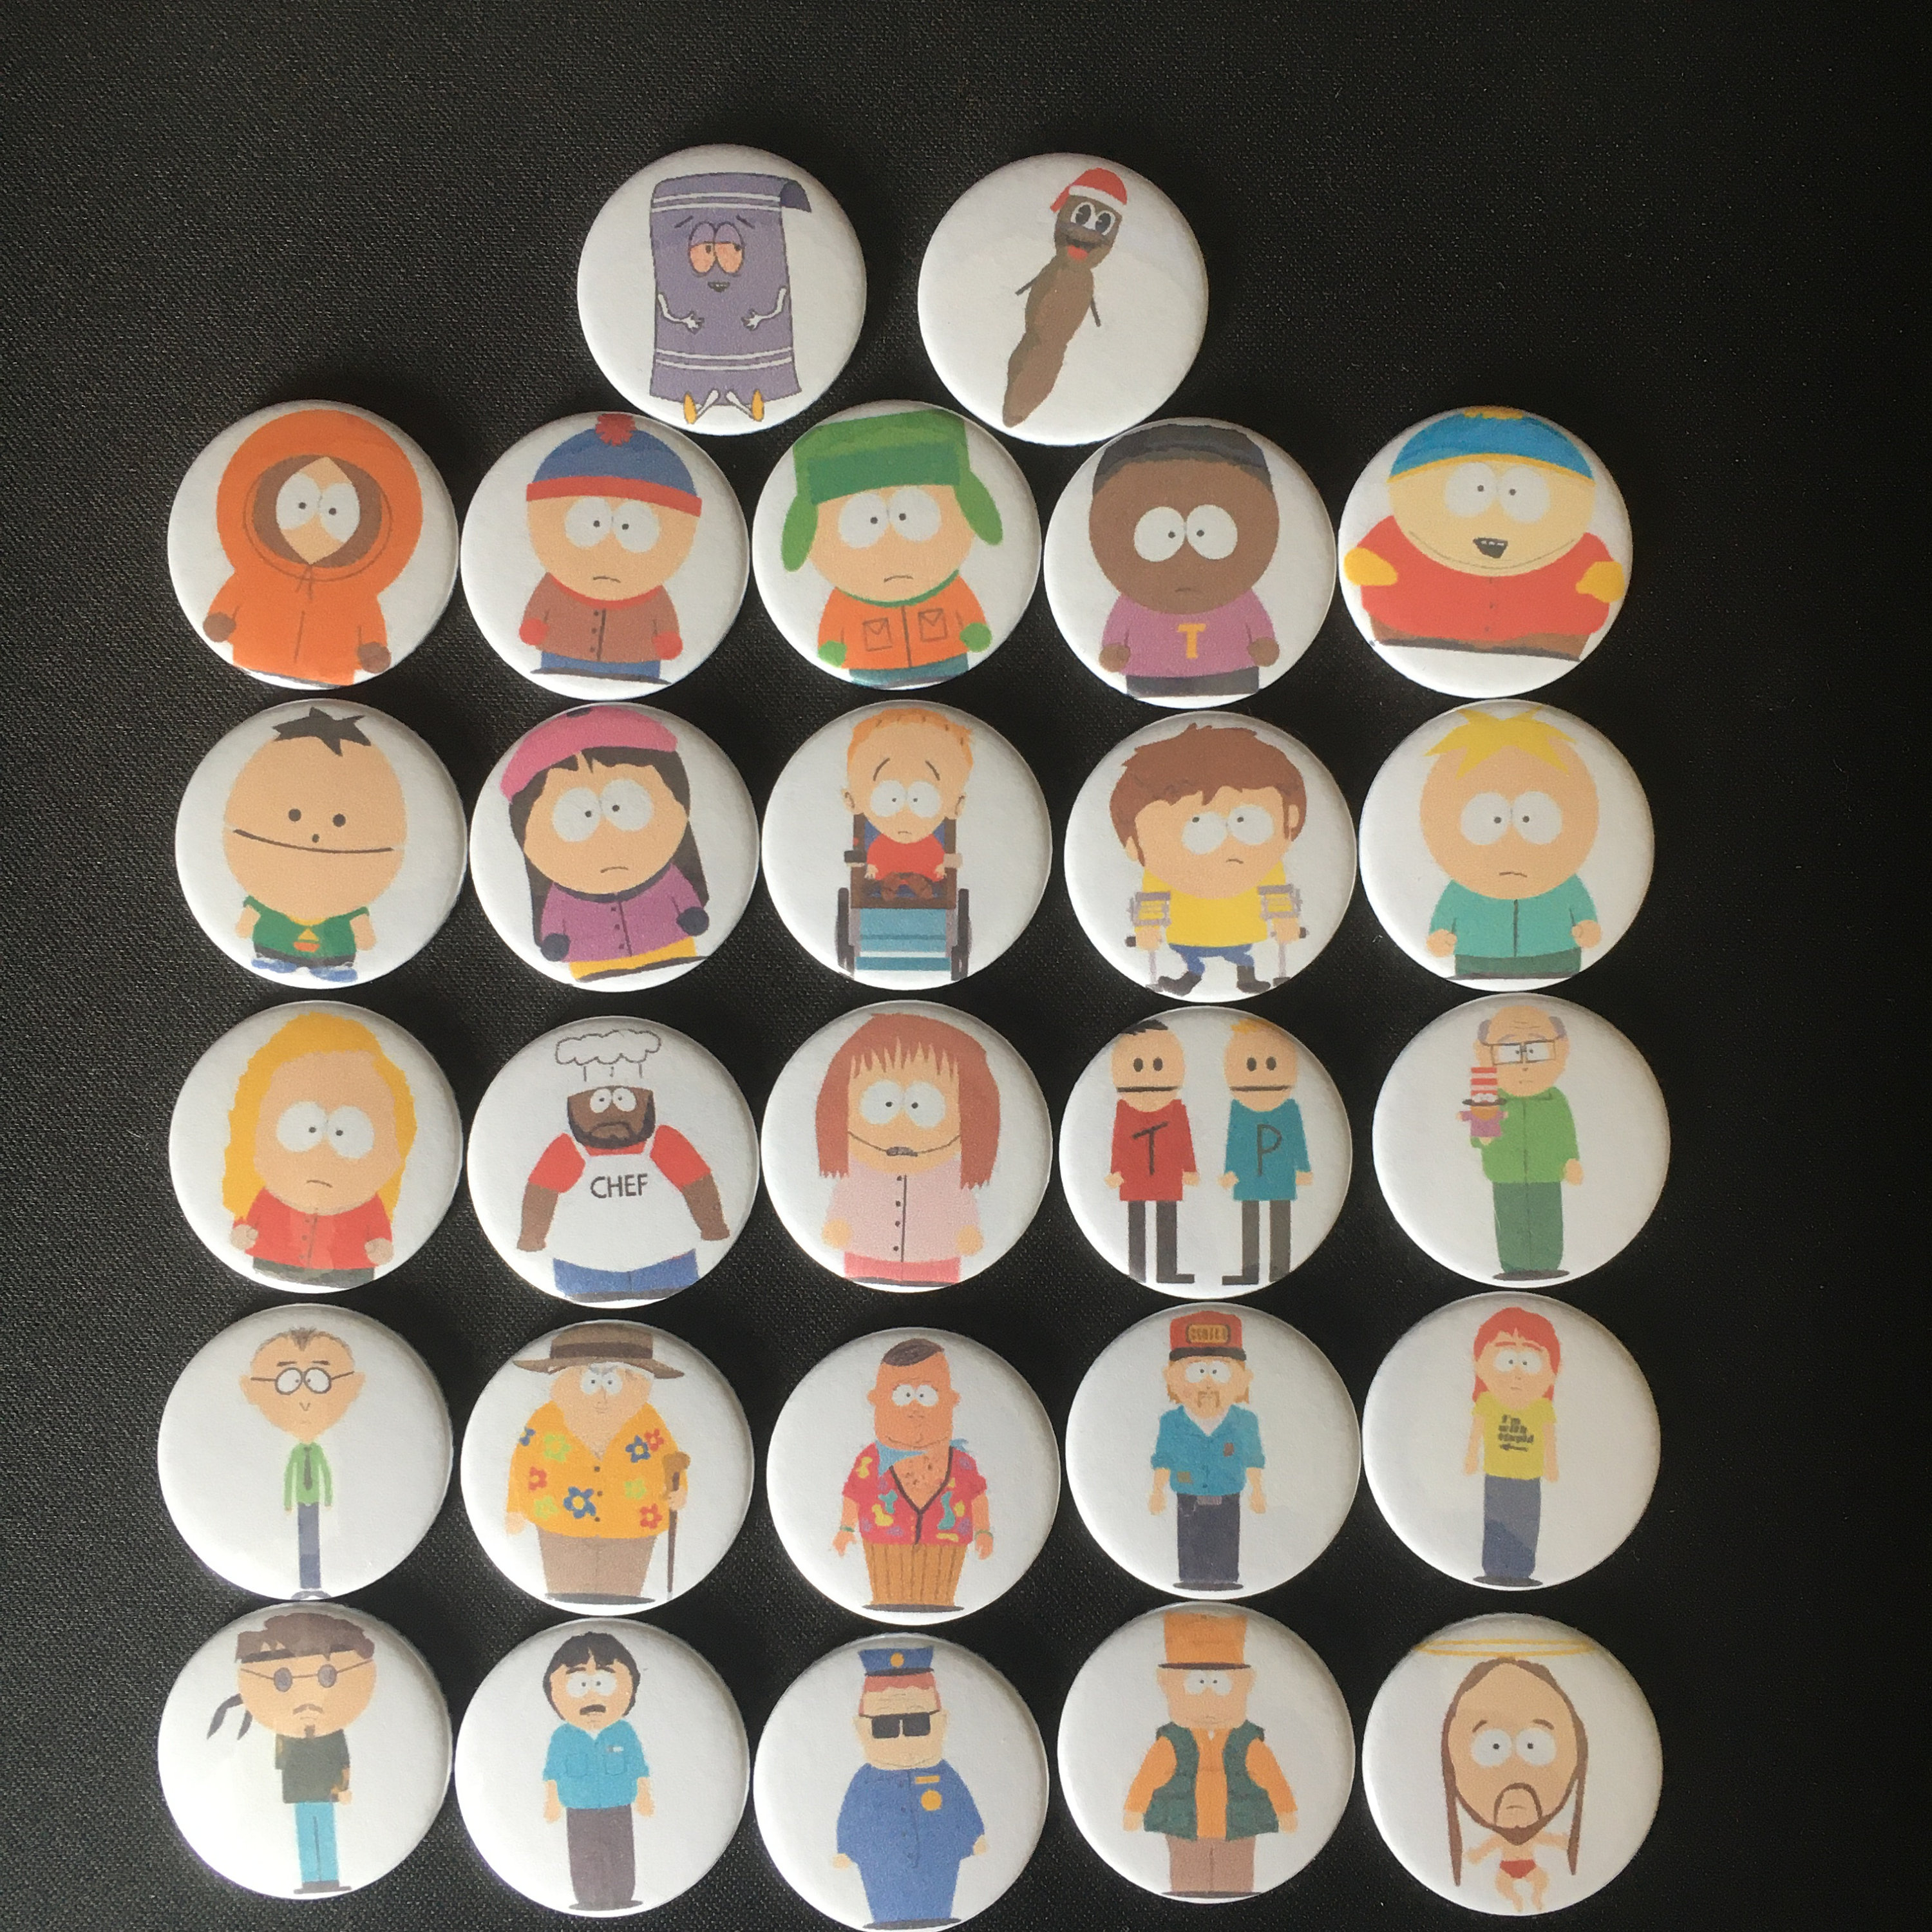 South Park Stickers 50 Piece 